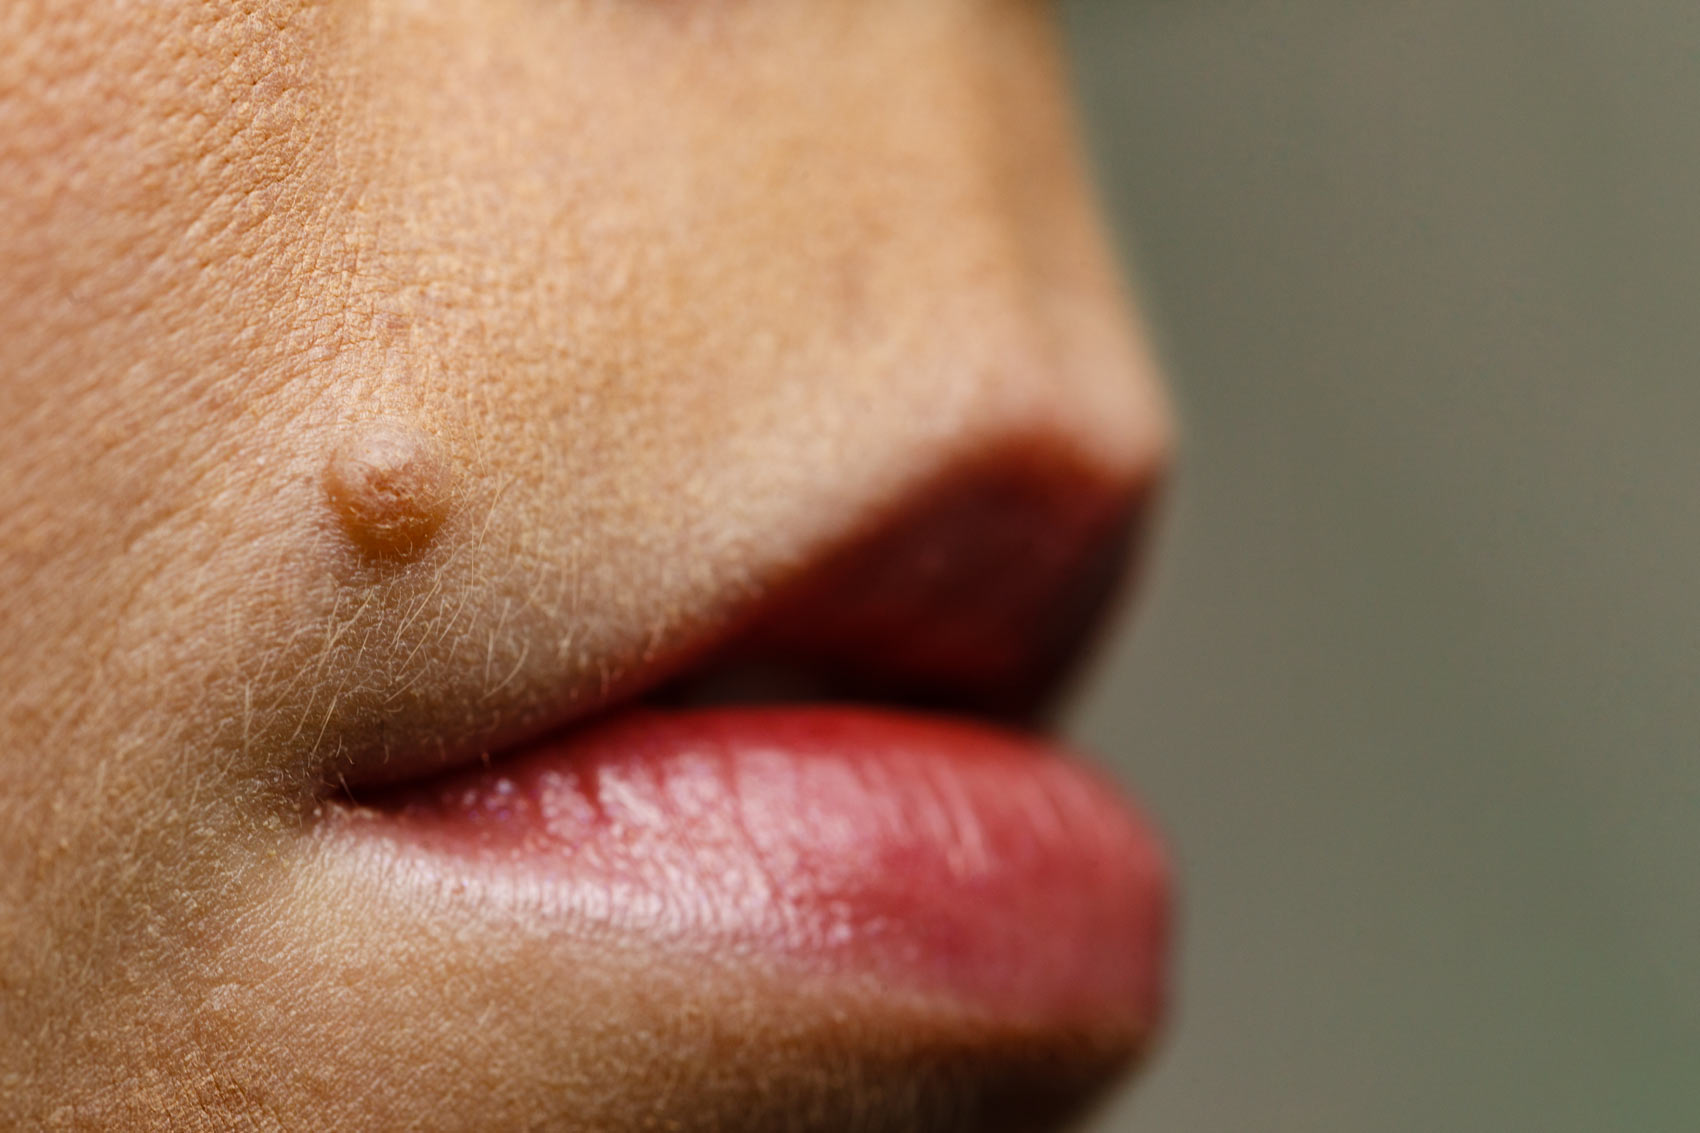 Mole on woman's lip